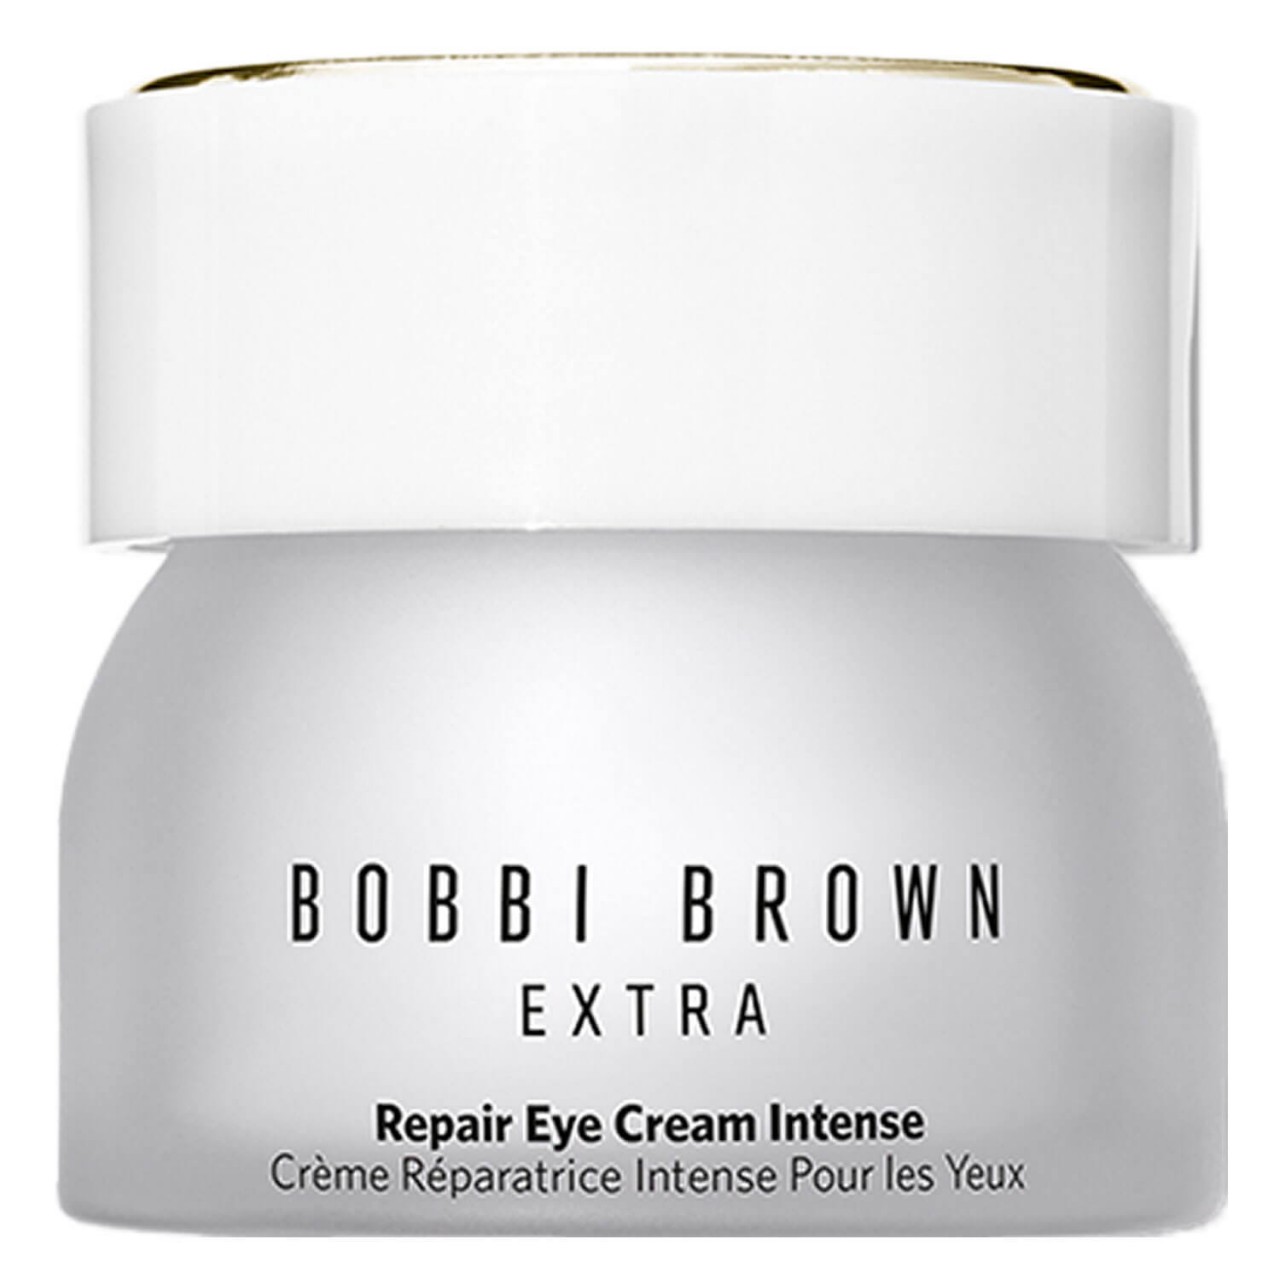 BB Skincare - EXTRA Repair Eye Cream Intense von Bobbi Brown